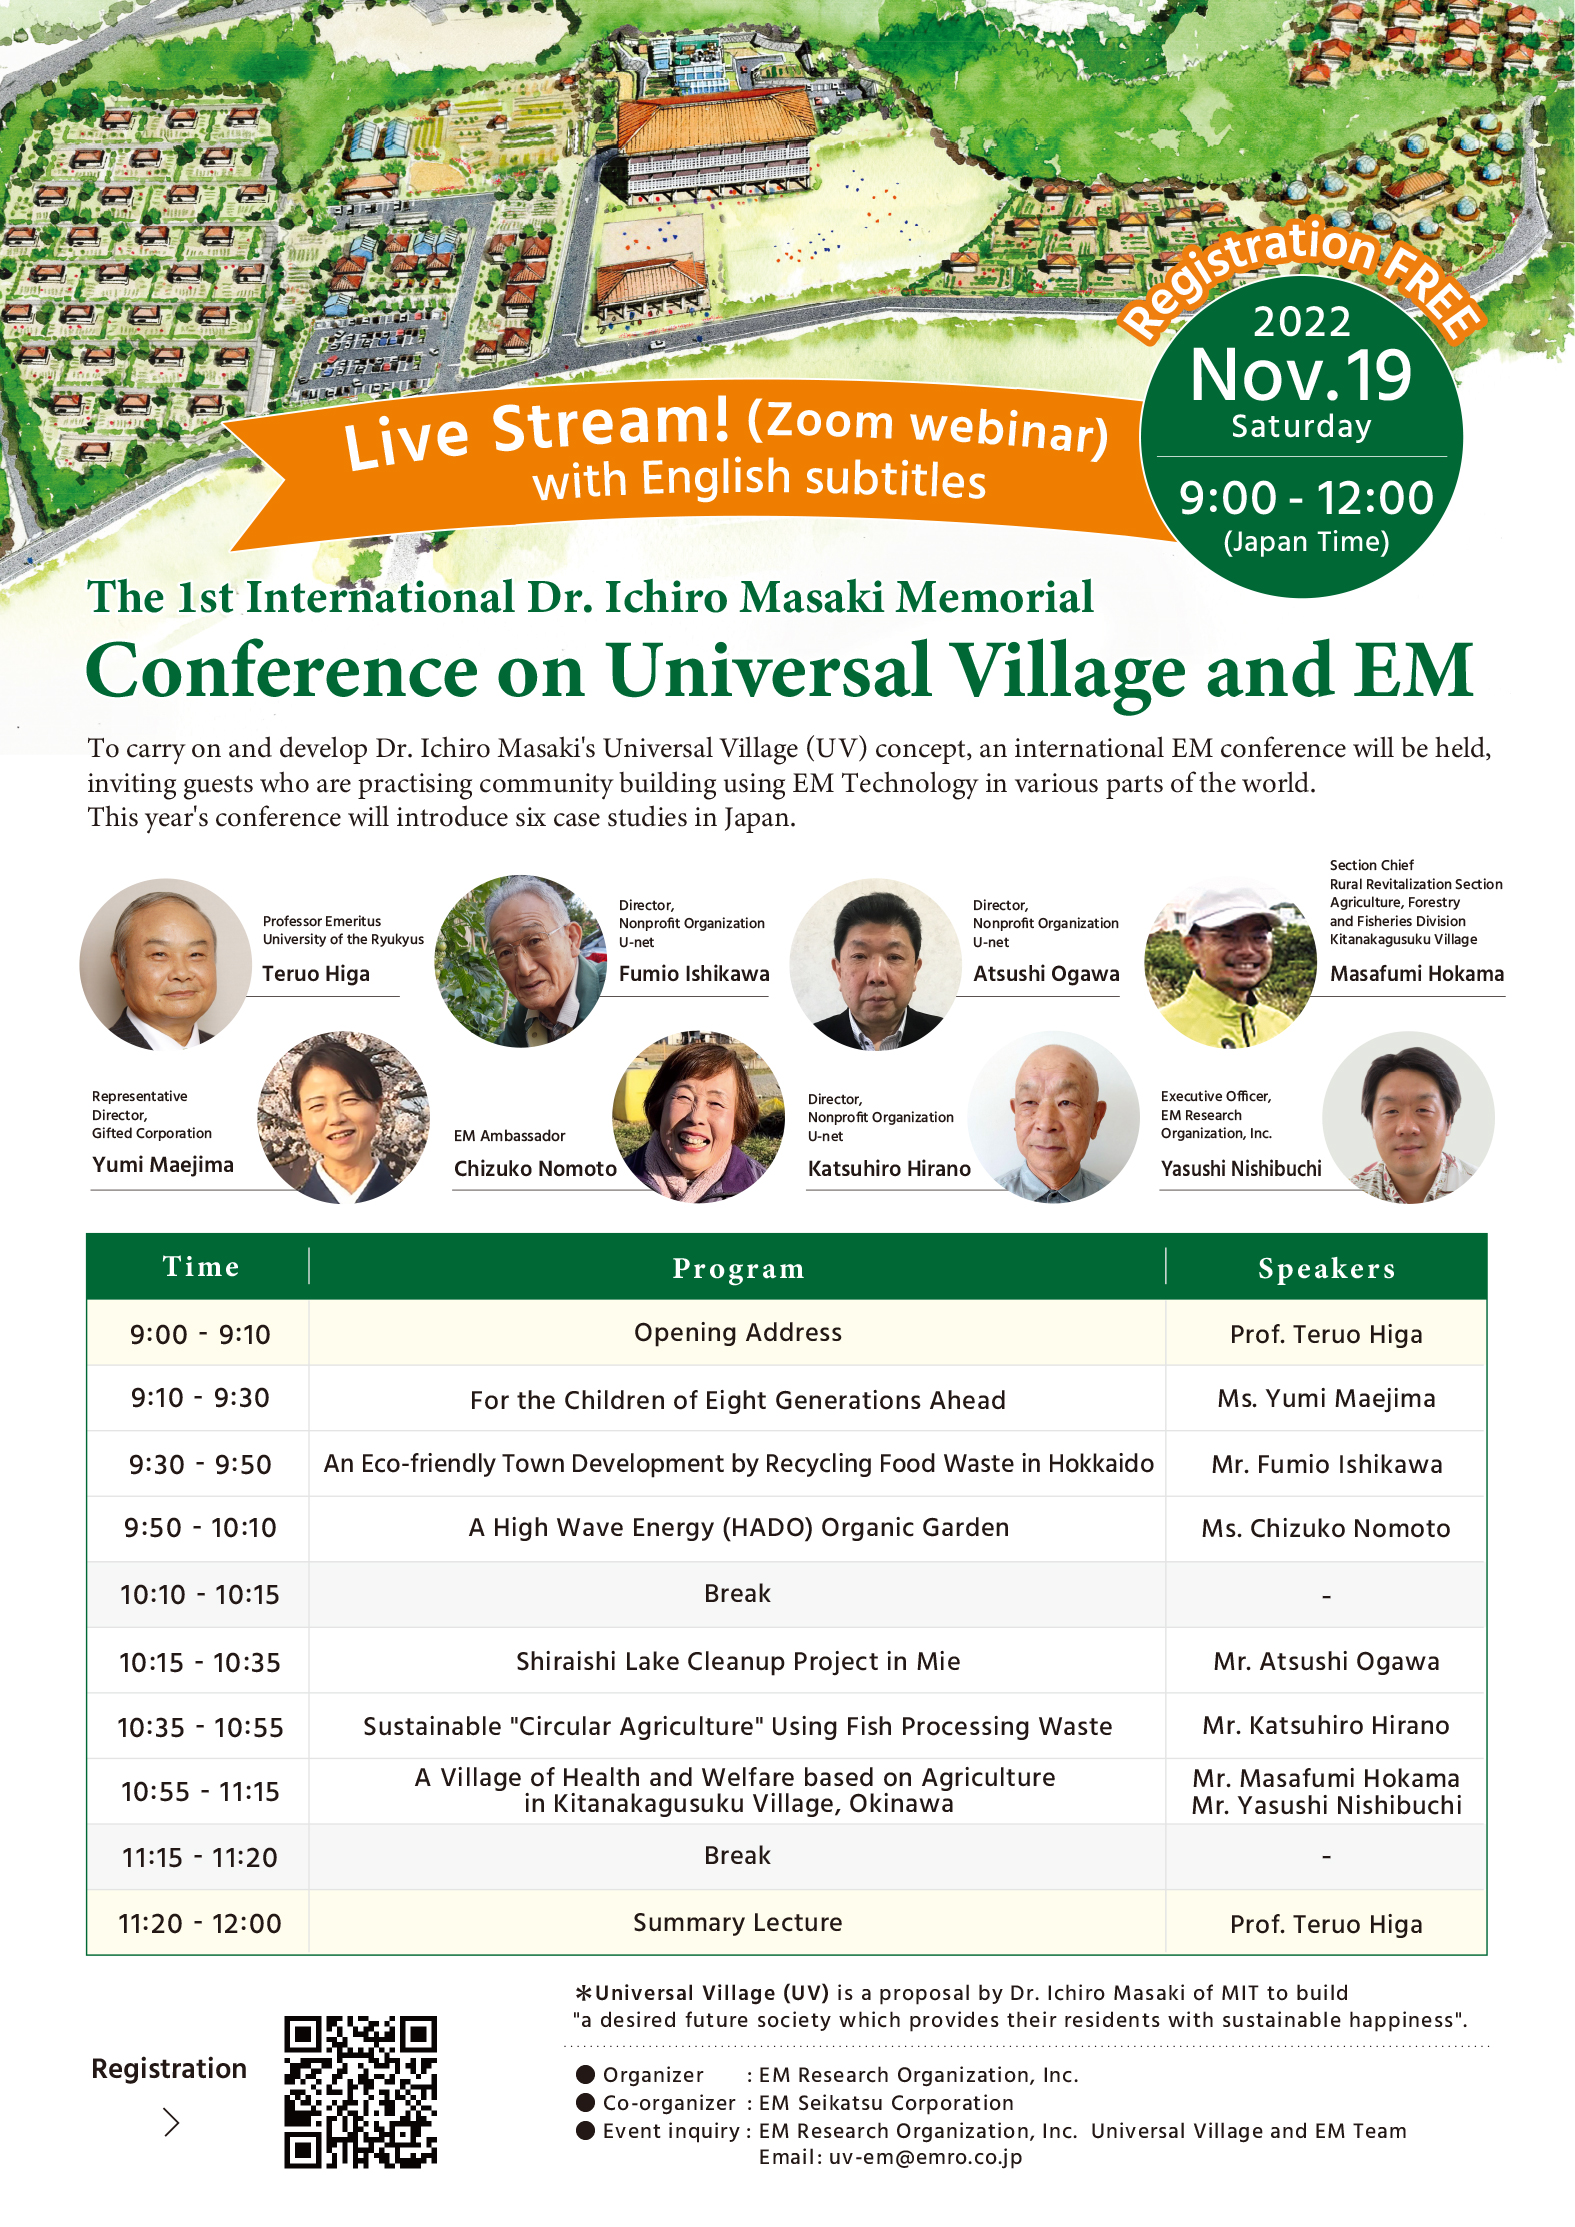 The 1st International Dr. Ichiro Masaki Memorial Conference on Universal Village and EM